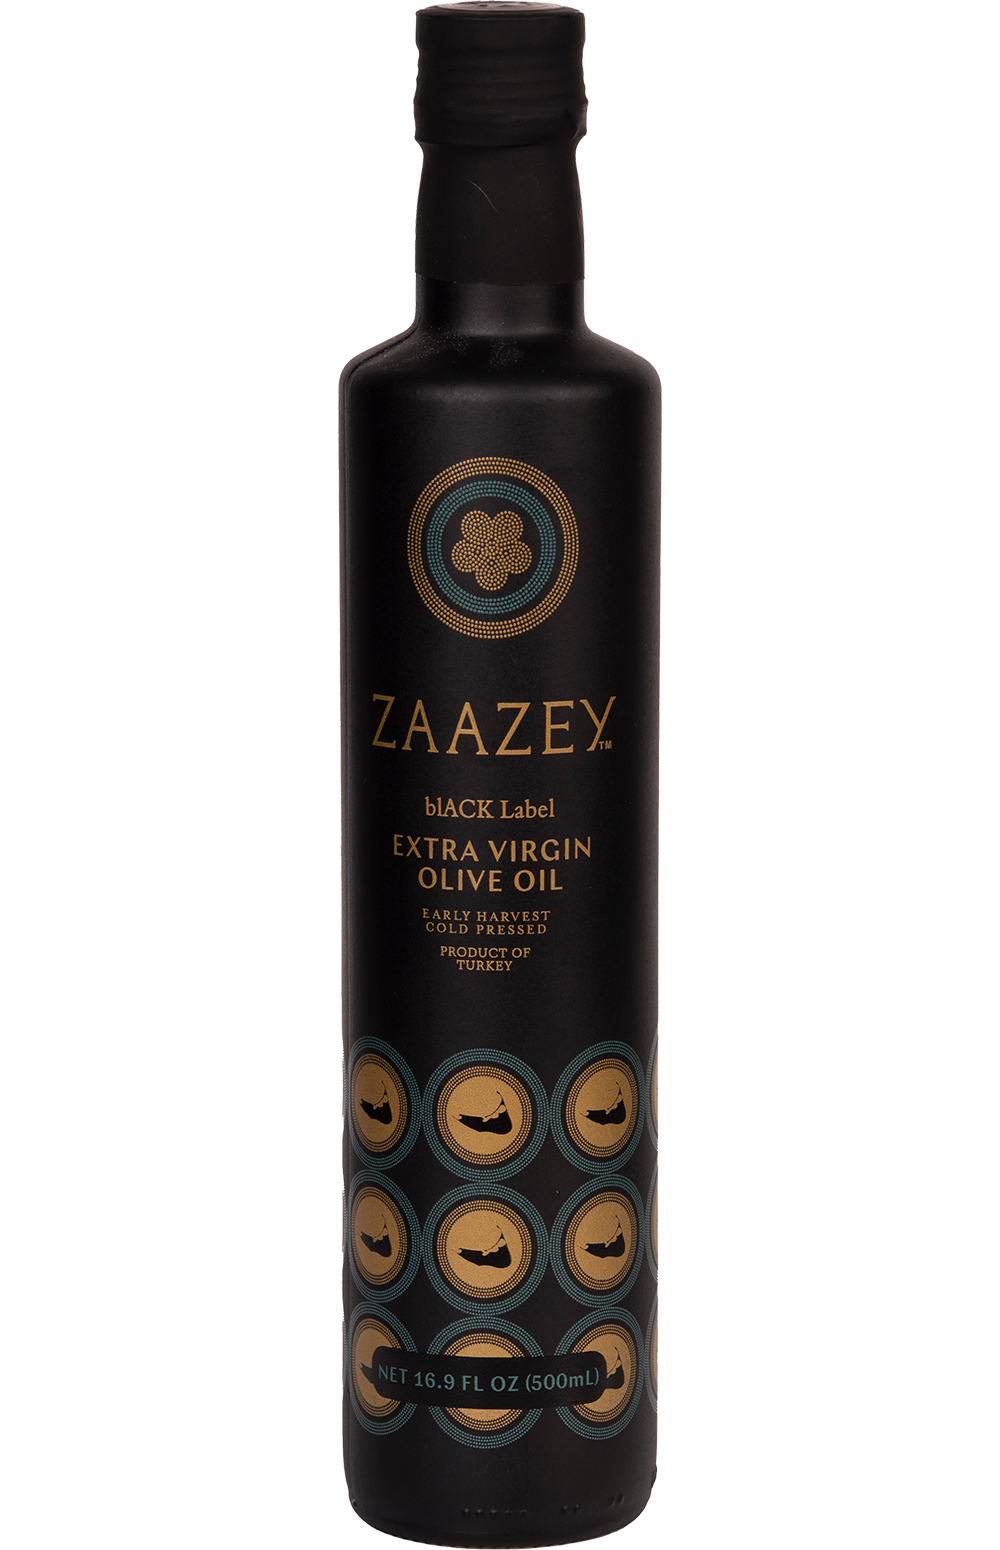 Zaazey “Black label”